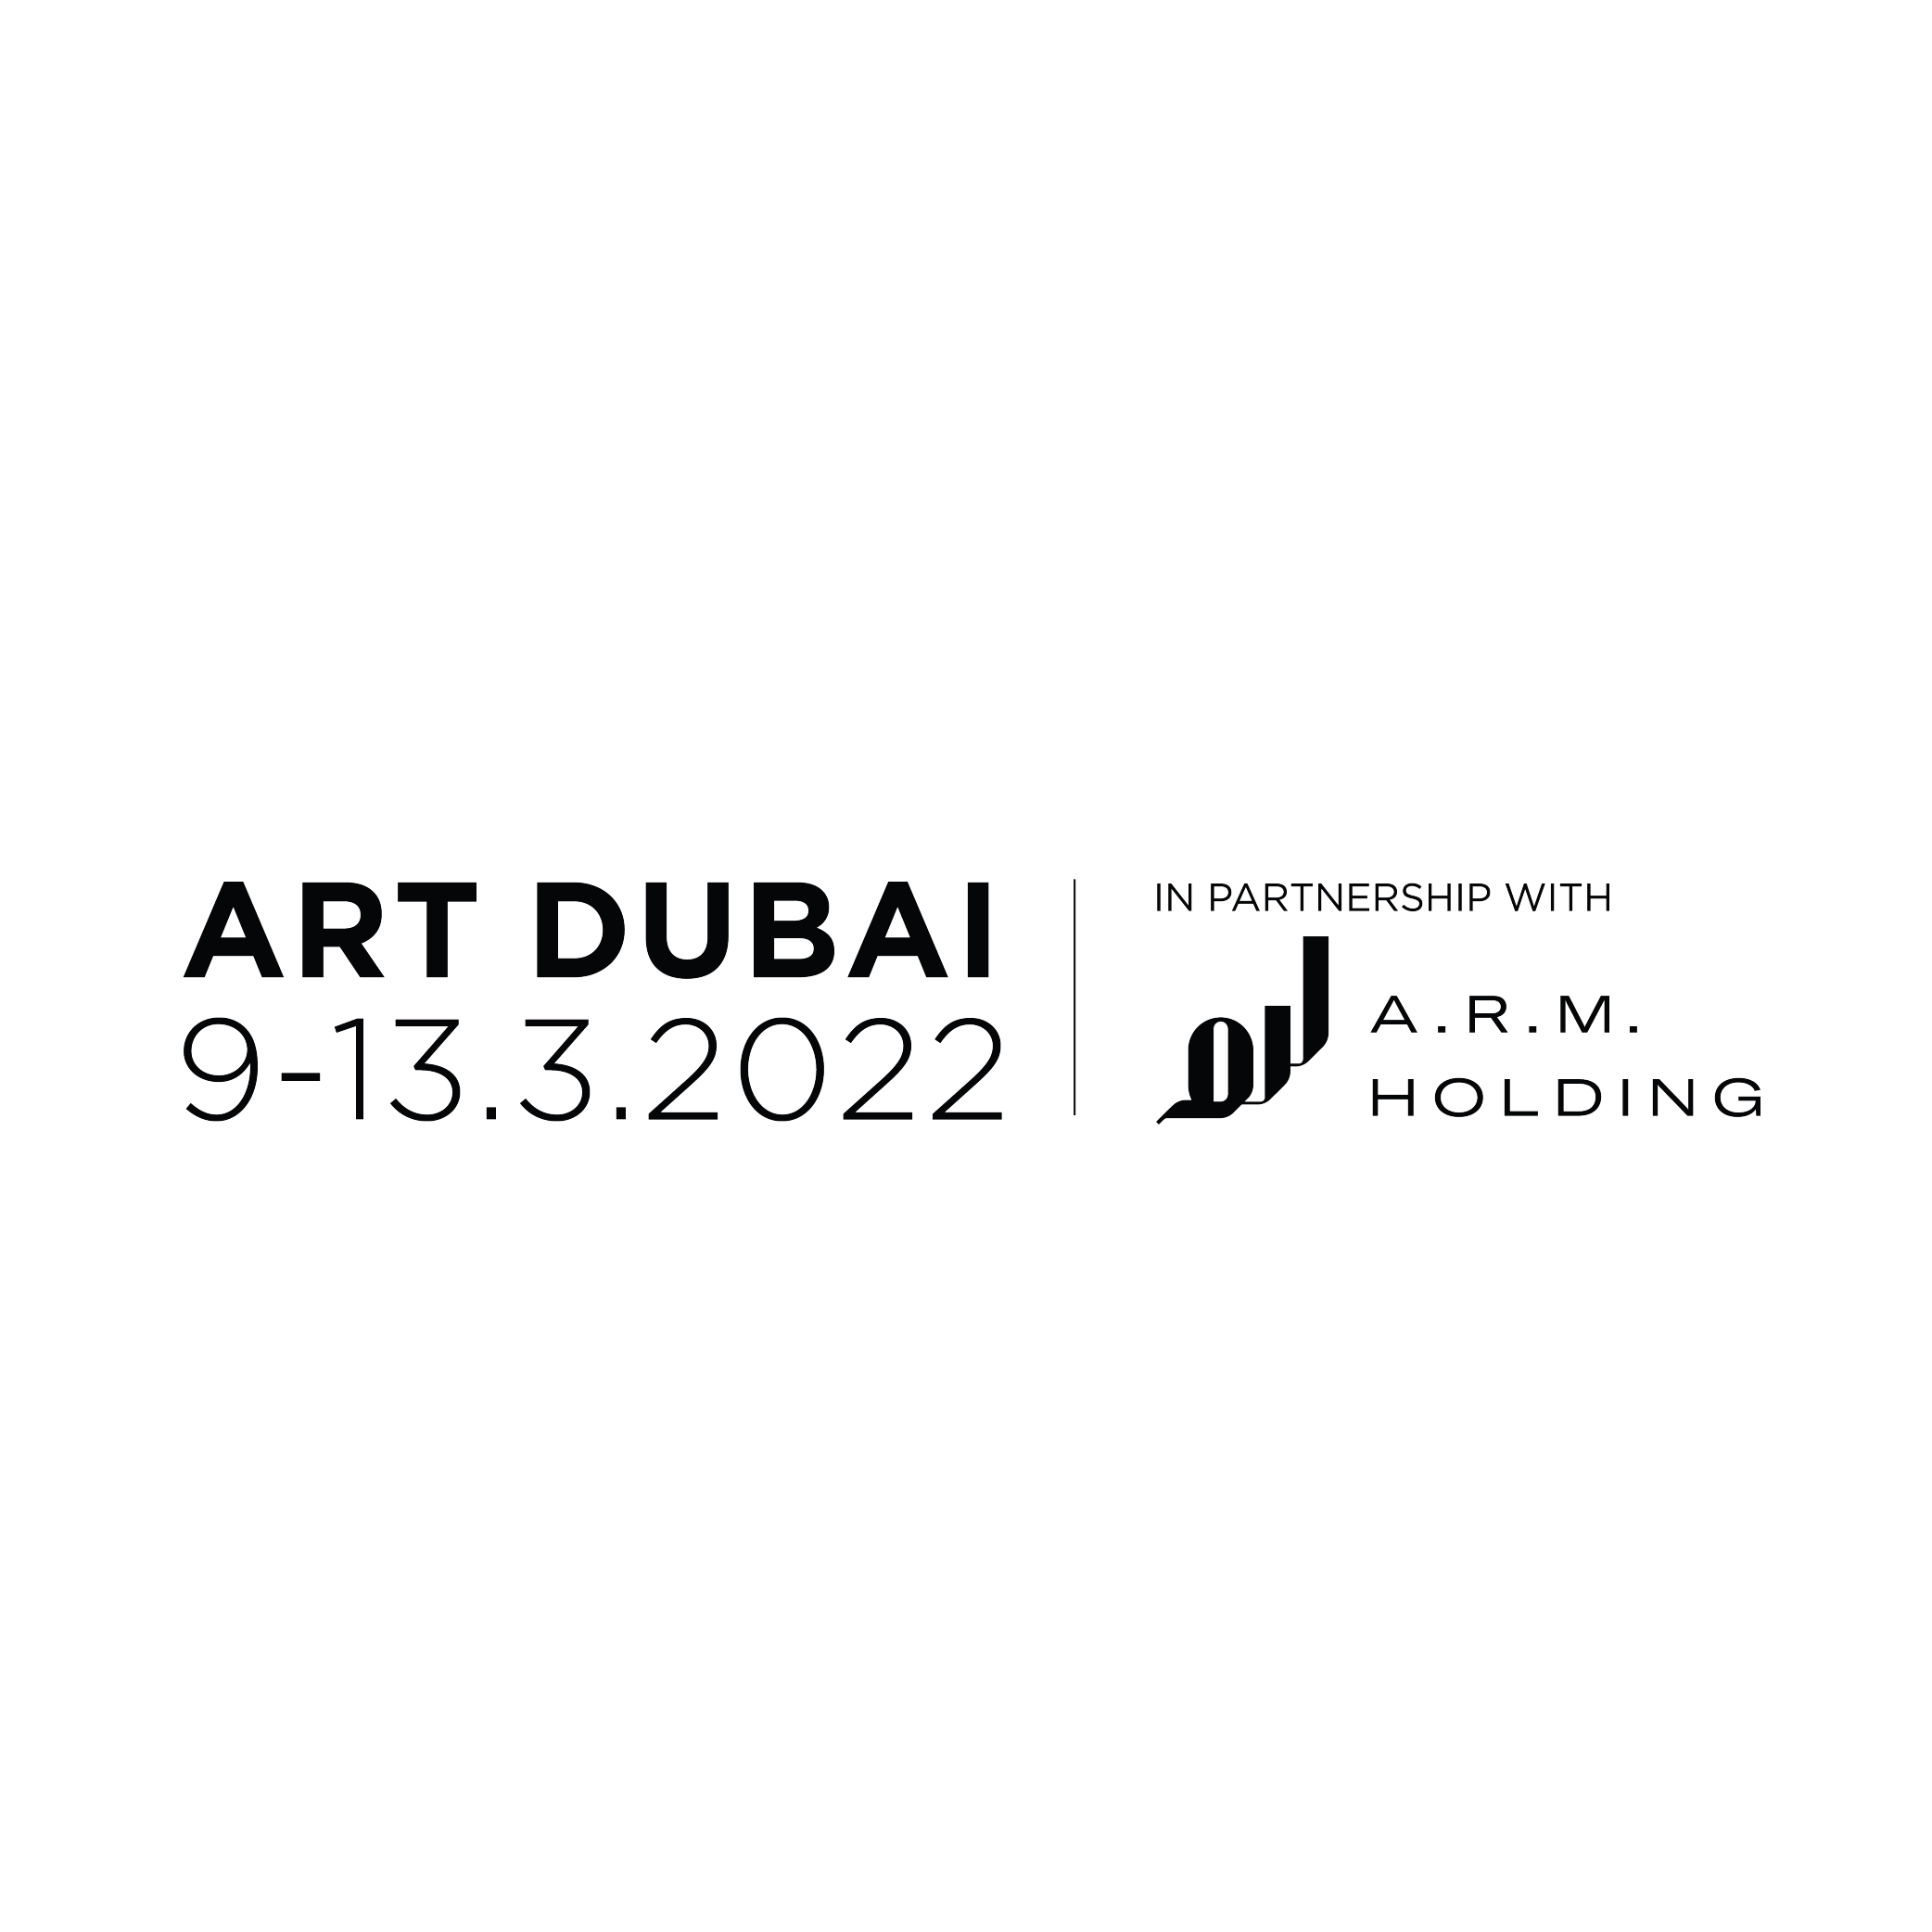 Art Dubai logo - SEC Newgate Middle East